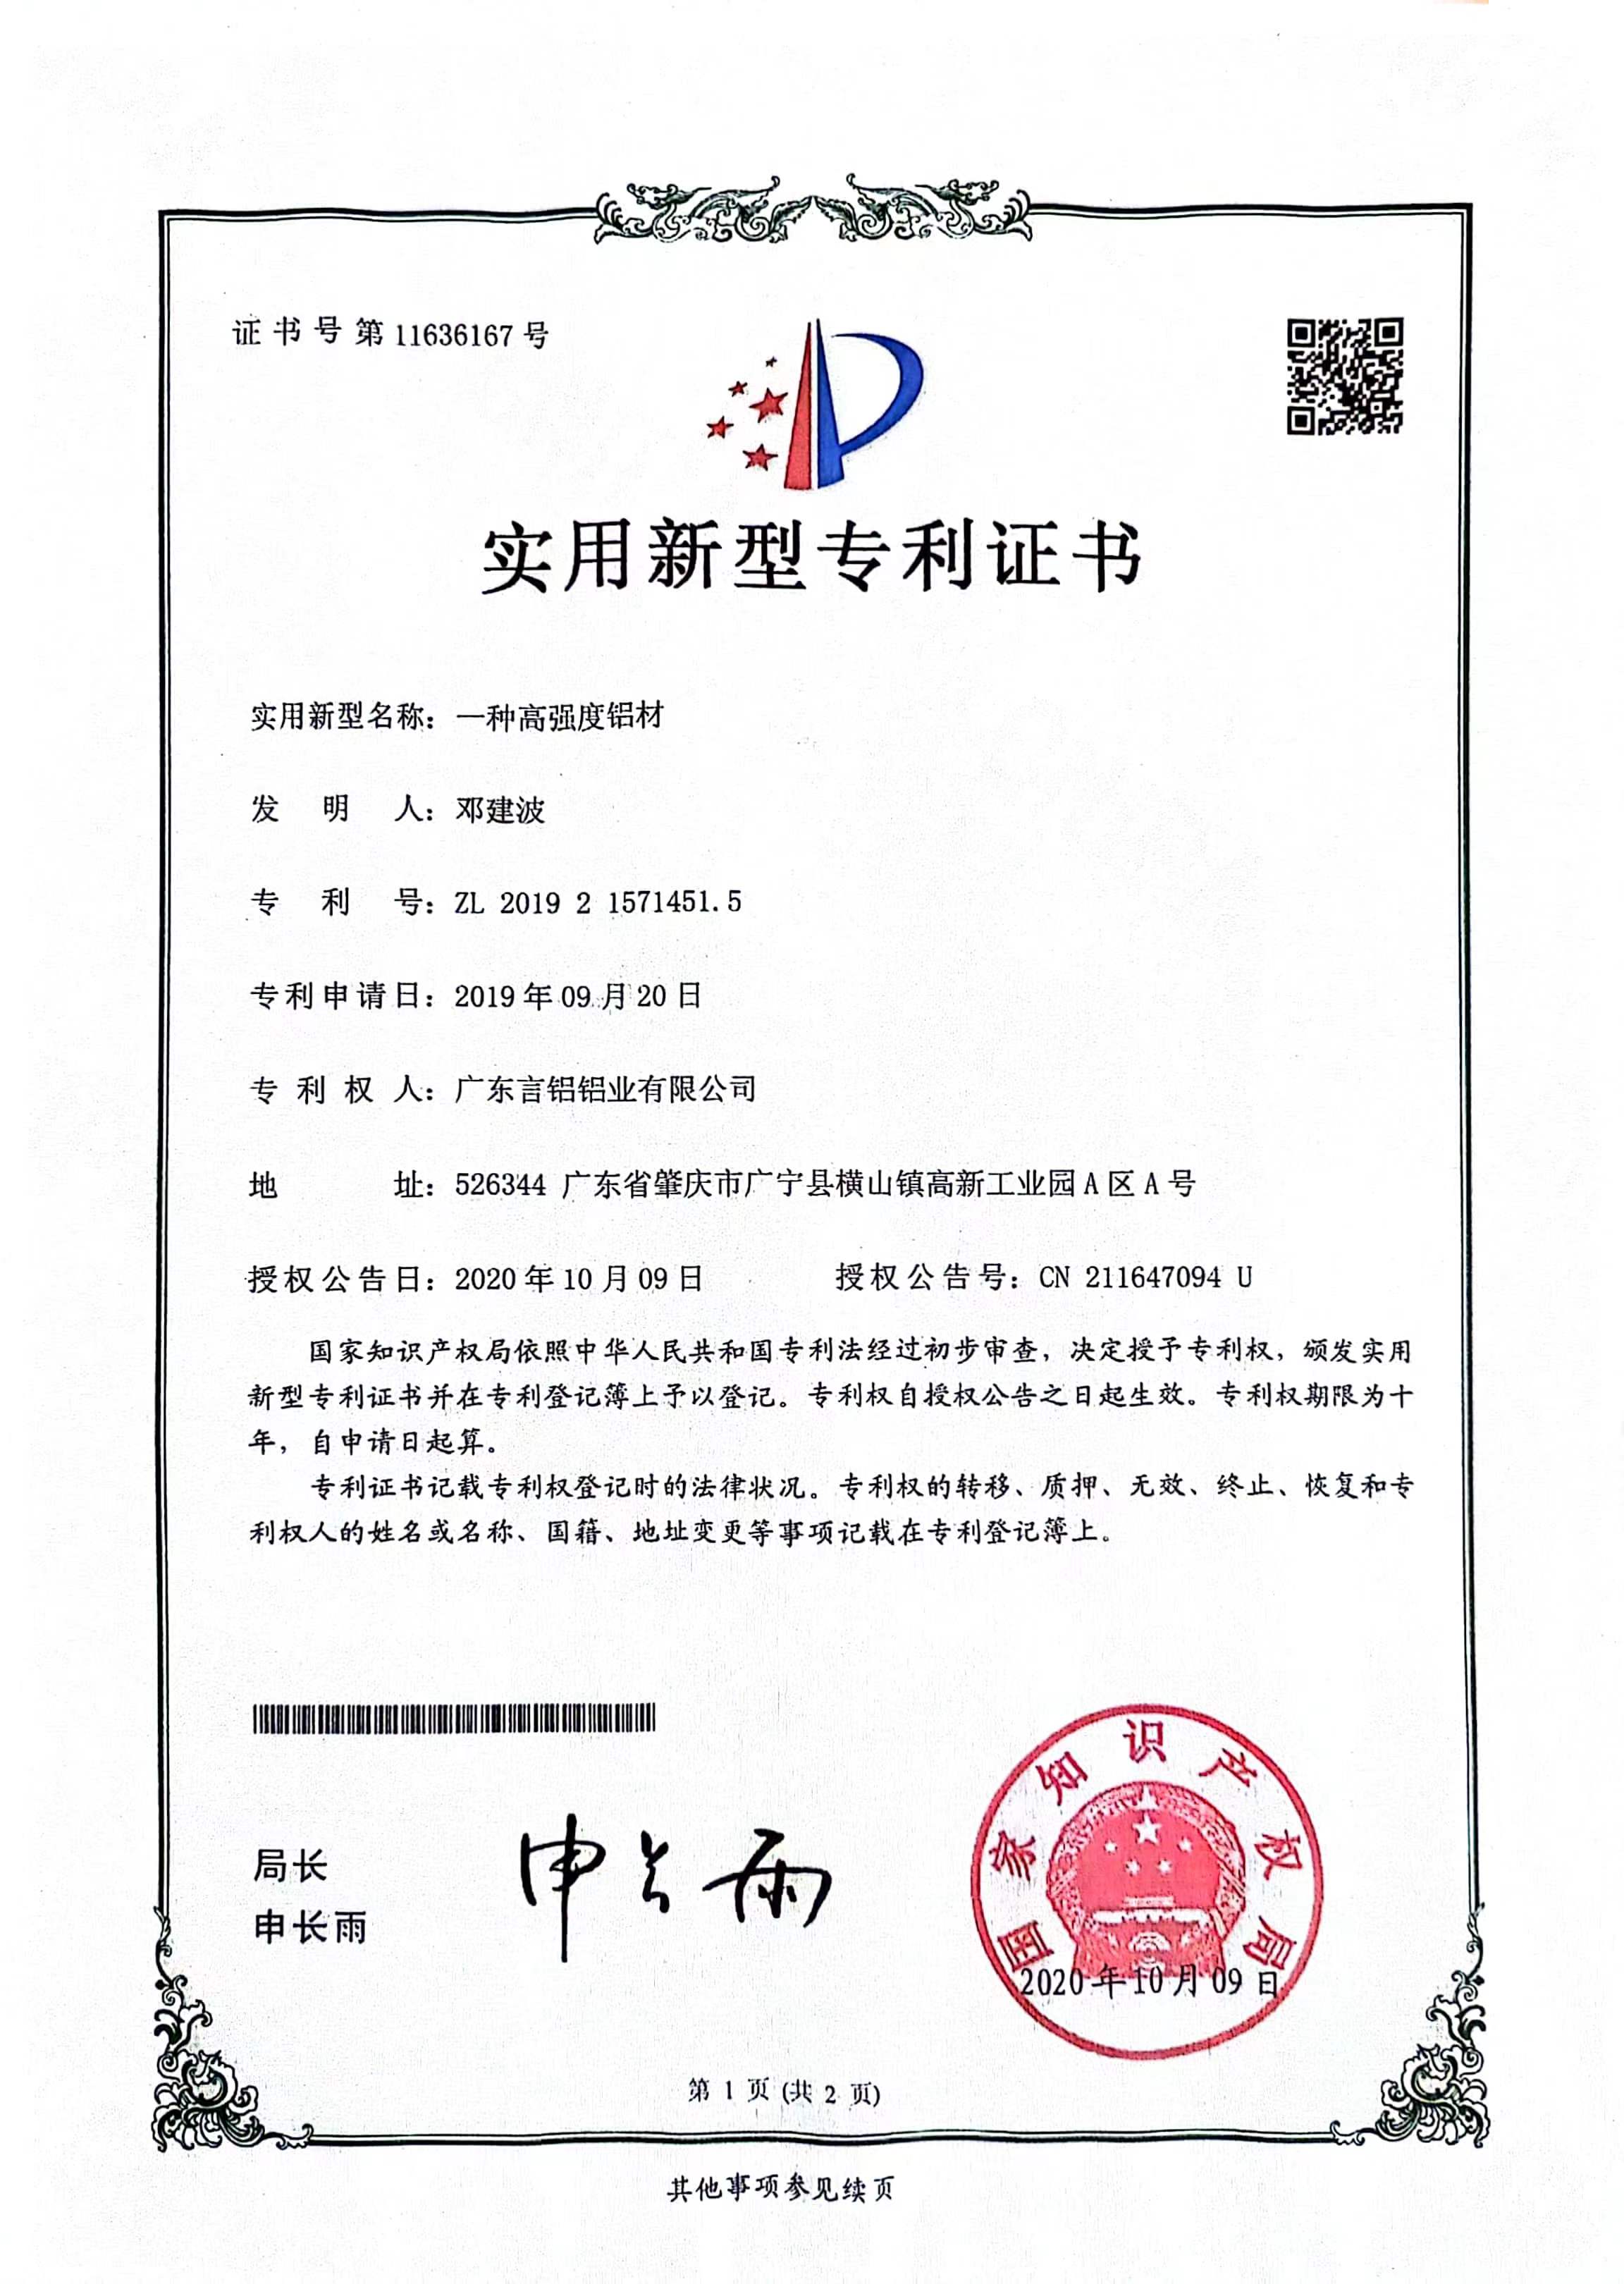 Patent certificate 4.jpg